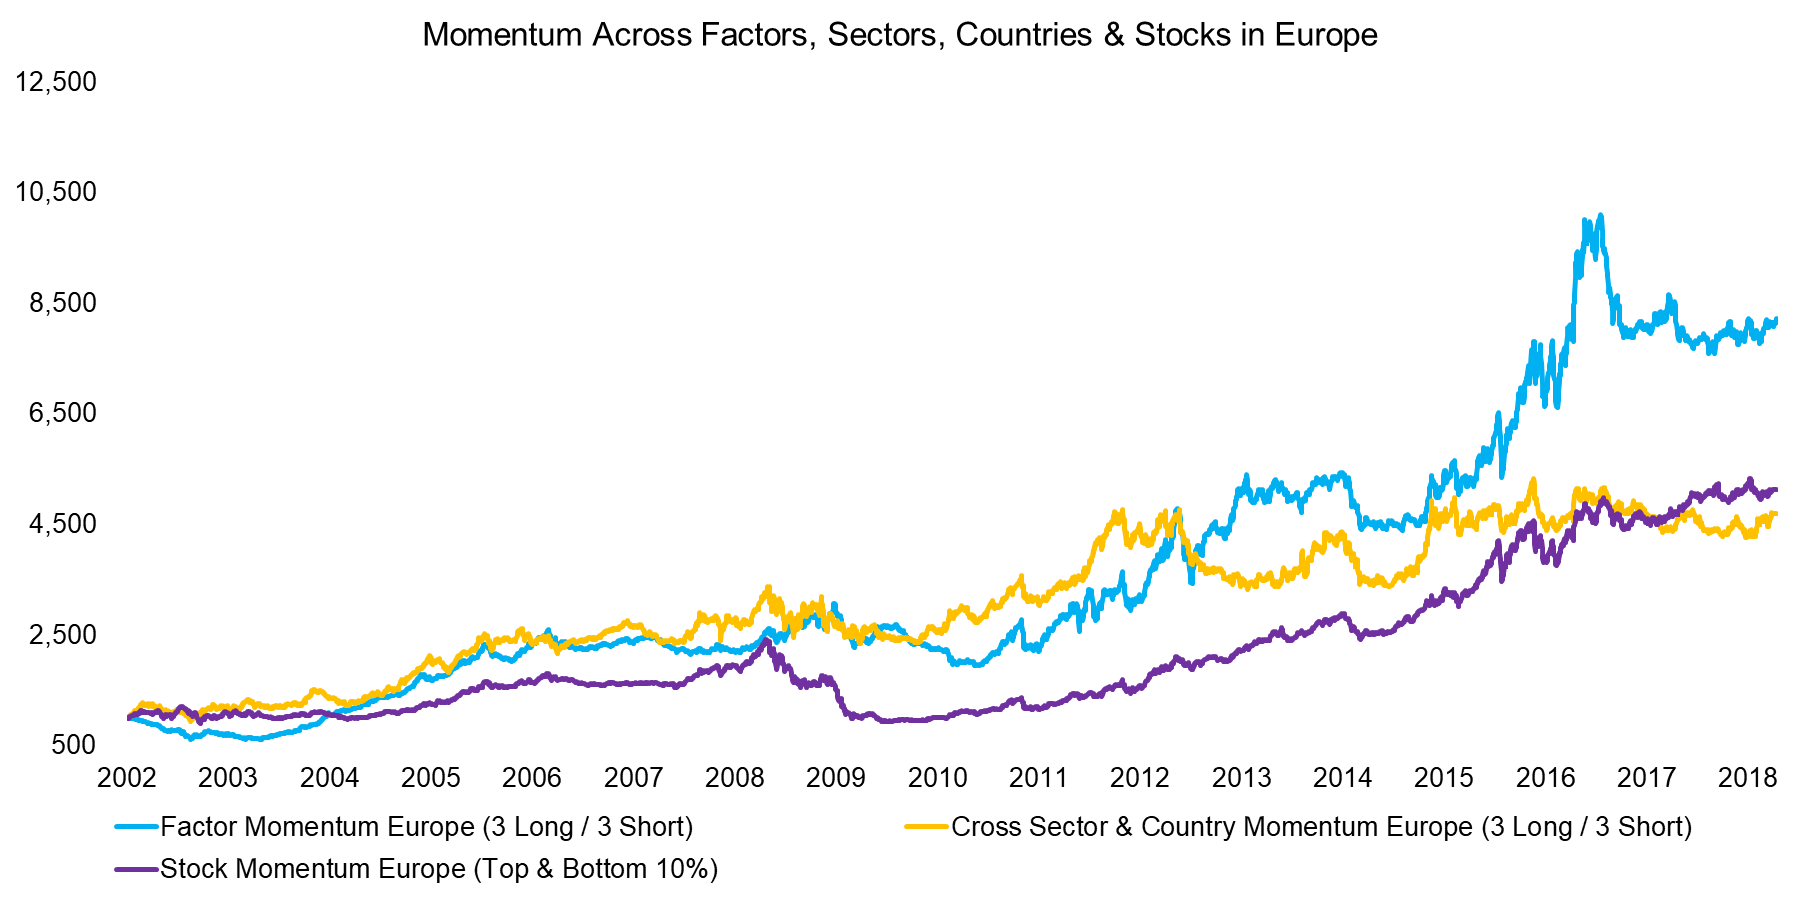 Momentum Across Factors, Sectors, Countries & Stocks in Europe